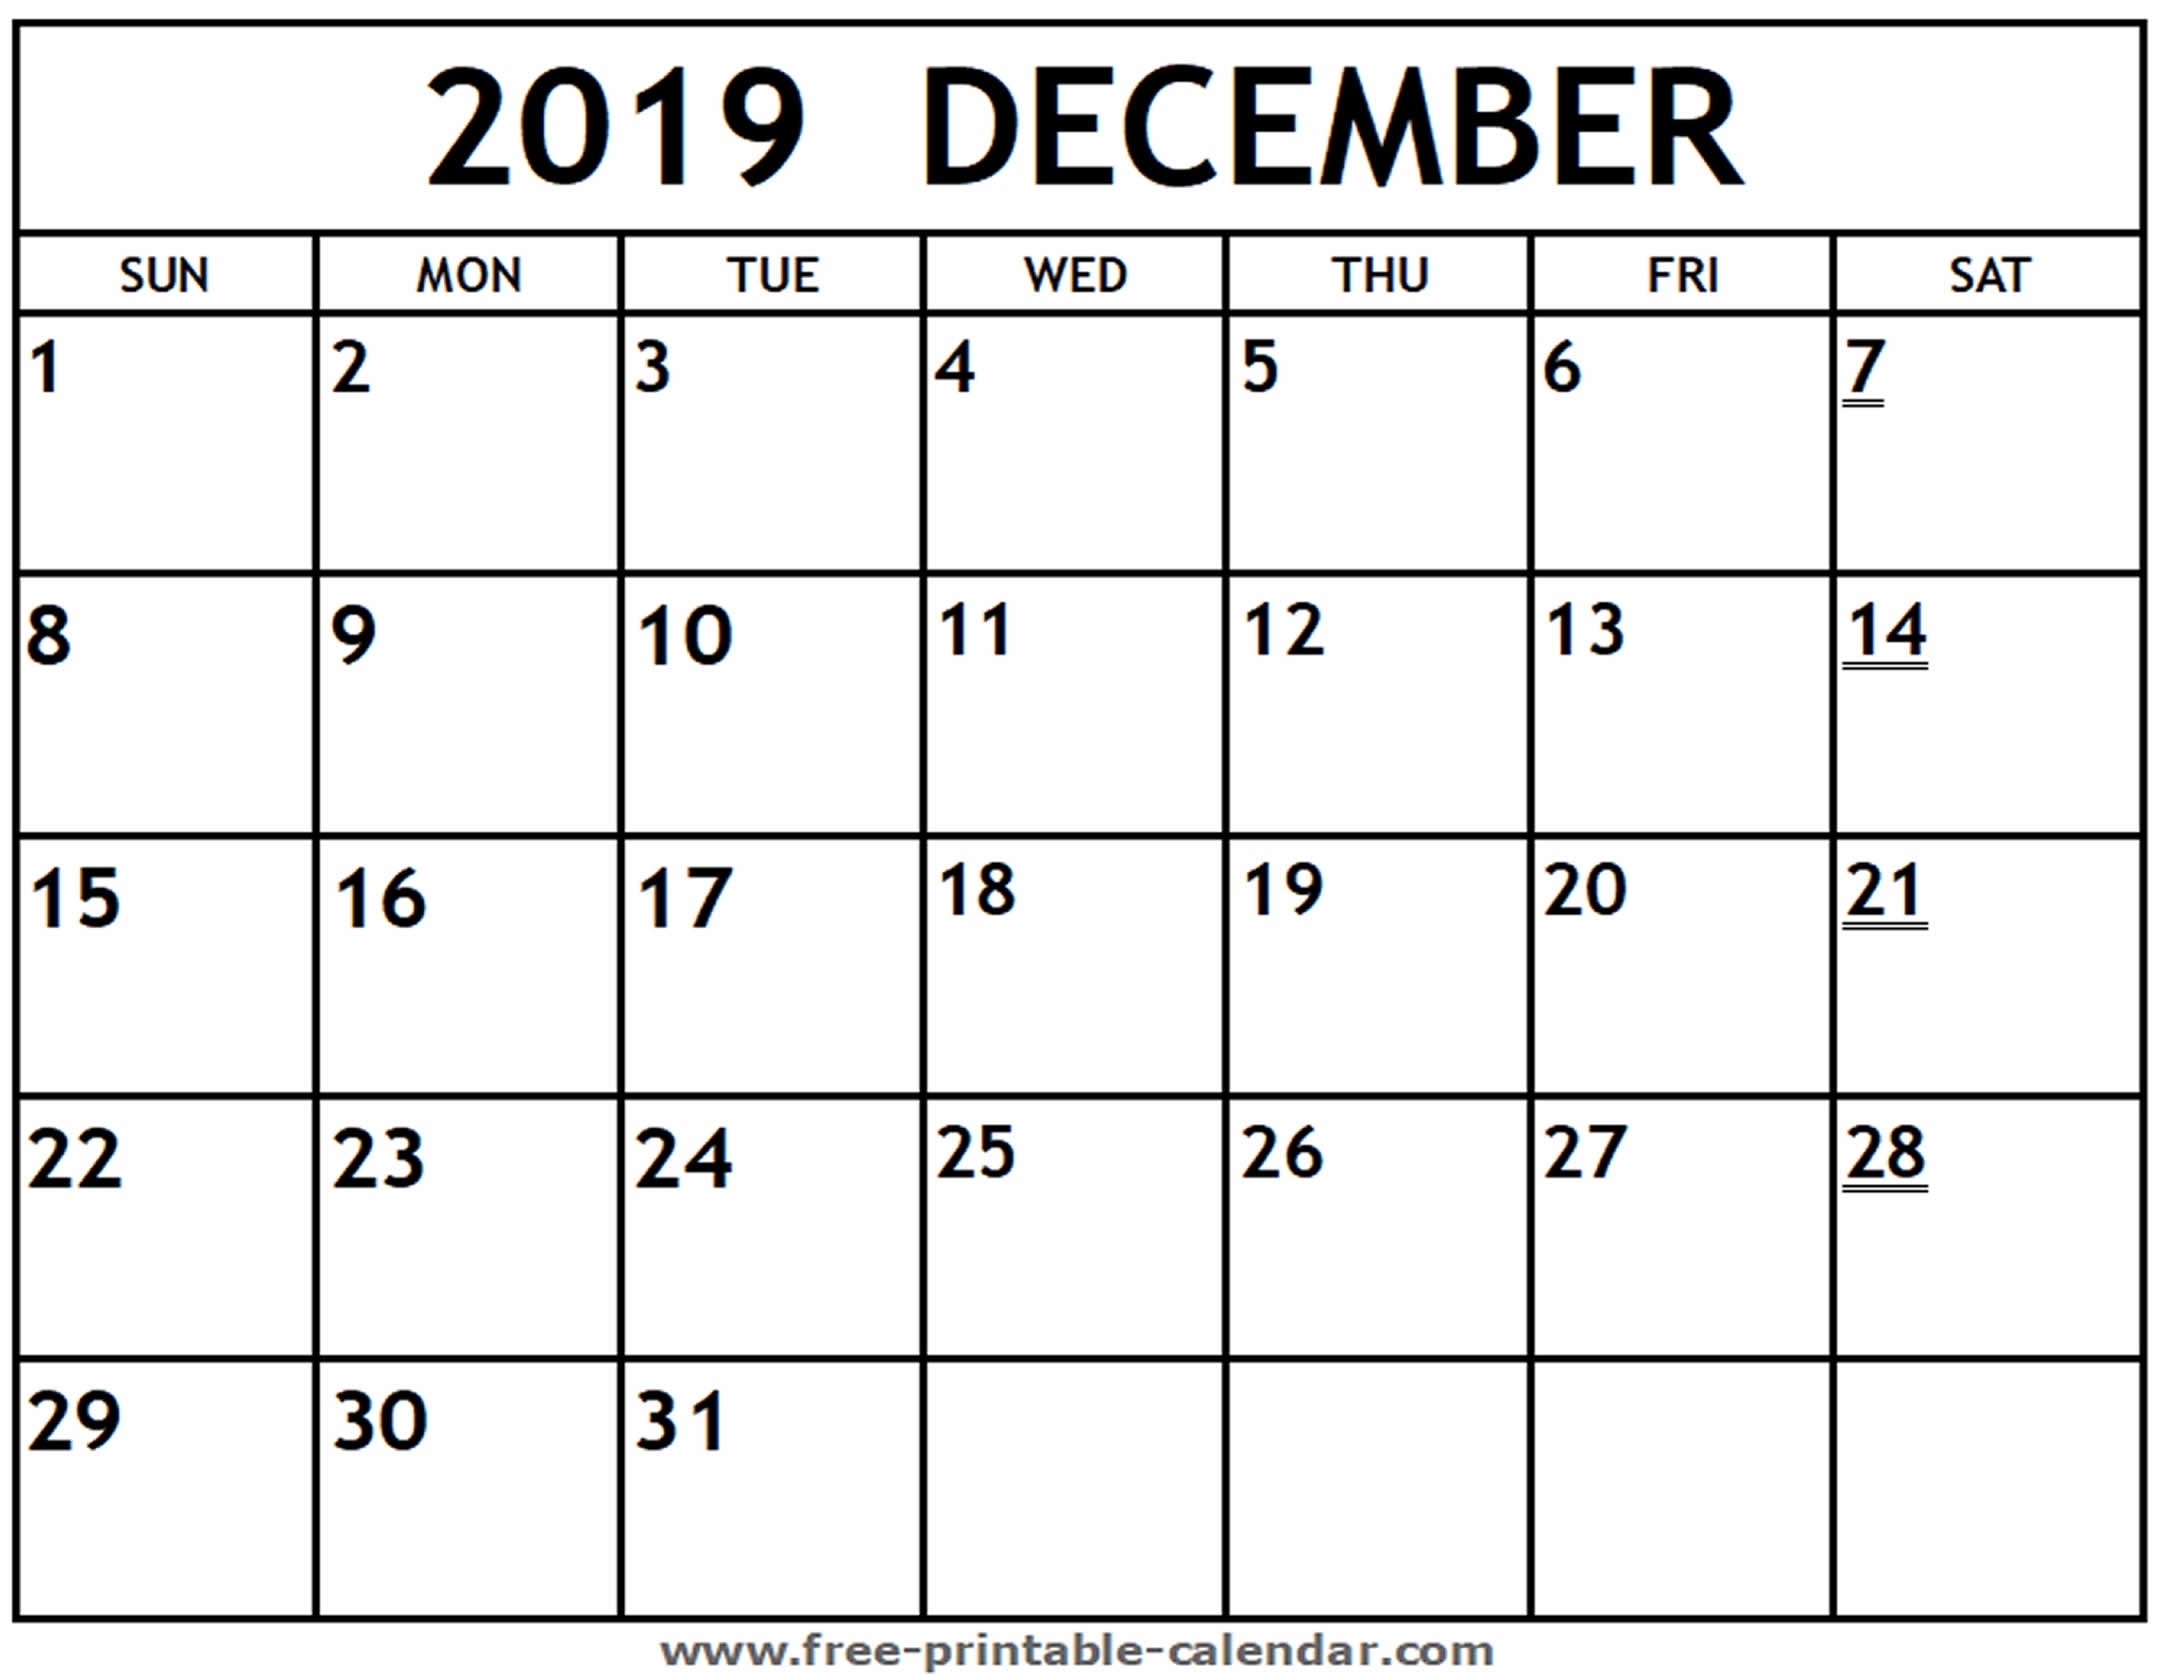 Printable 2019 December Calendar - Free-Printable-Calendar